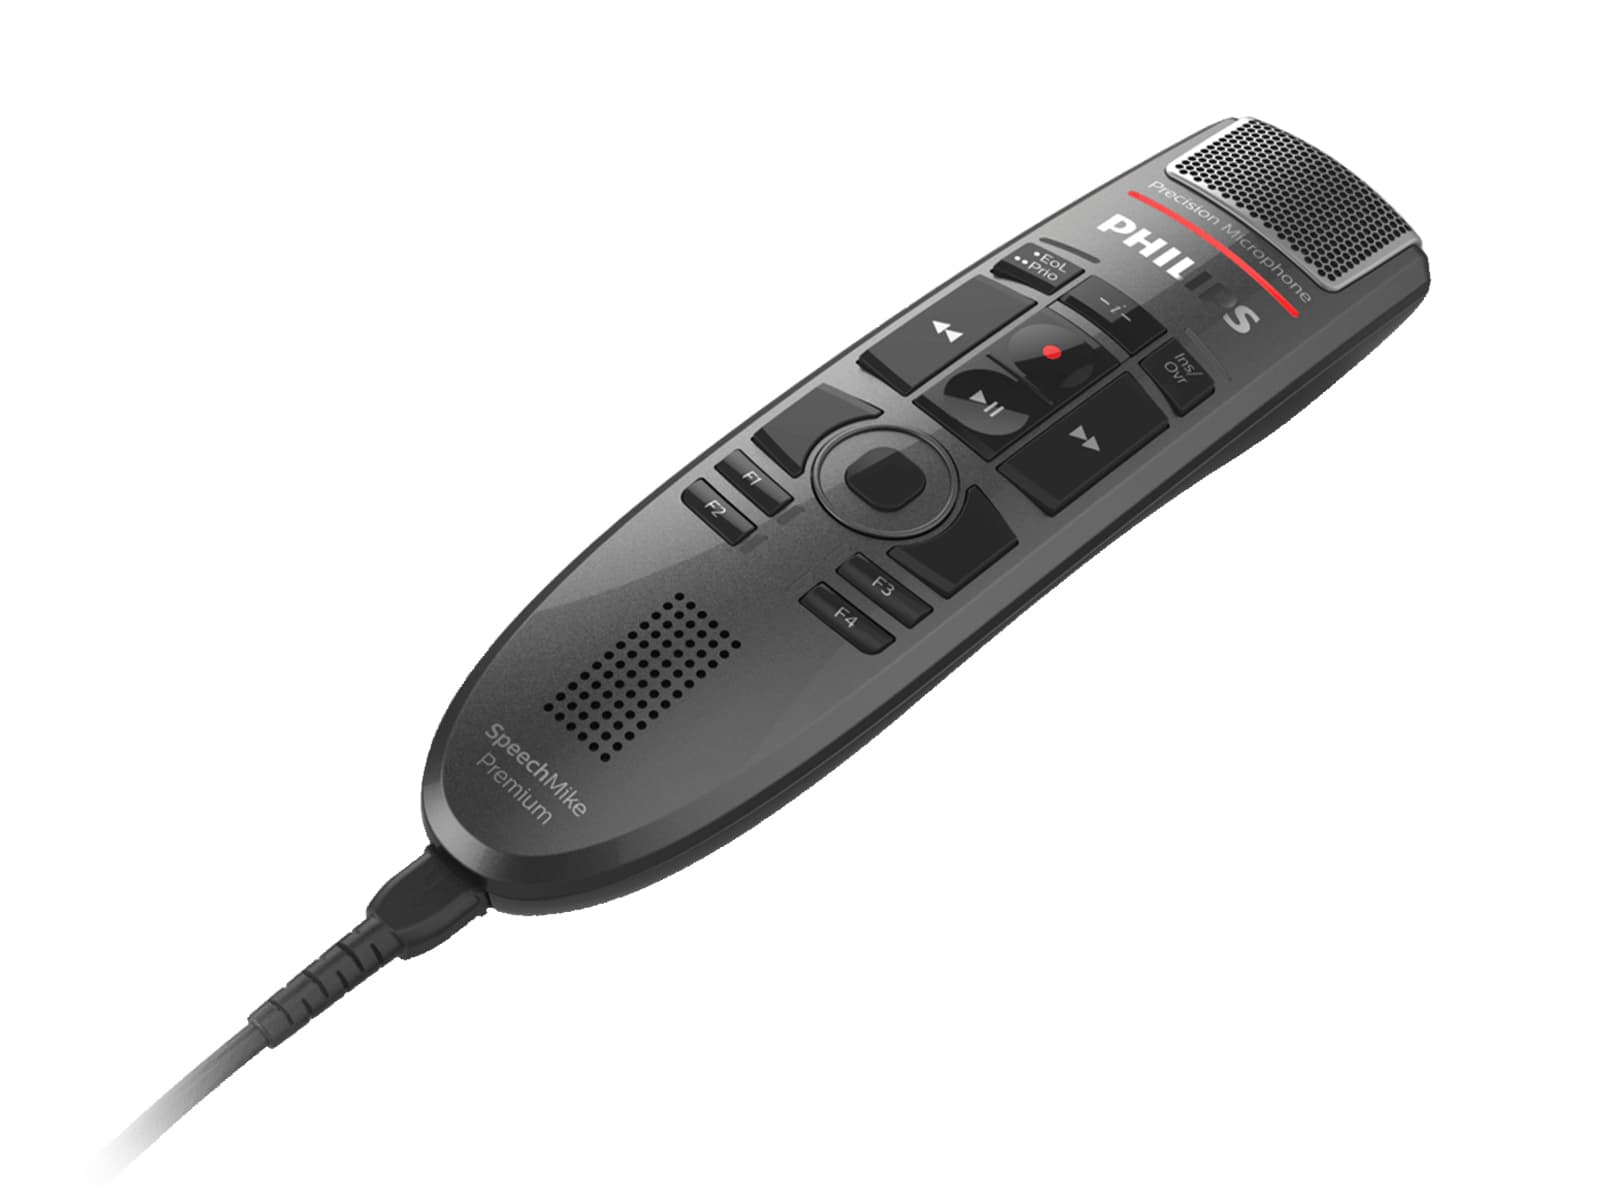 Philips SpeechMike Micrófono de dictado táctil premium (SMP3700) Monitors.com